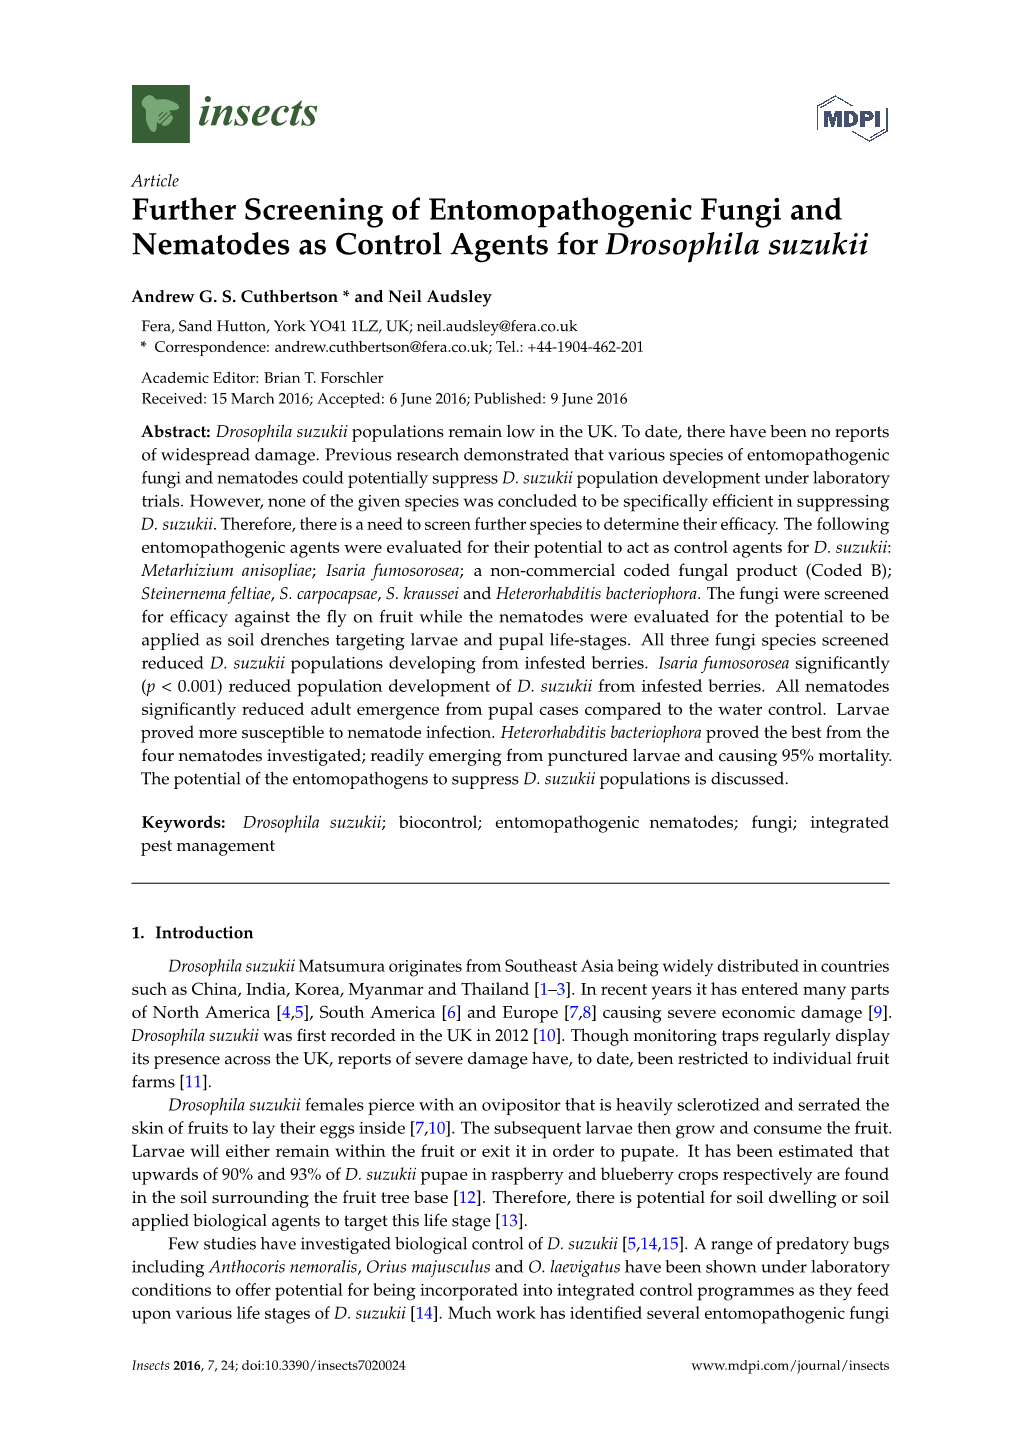 Further Screening of Entomopathogenic Fungi and Nematodes As Control Agents for Drosophila Suzukii